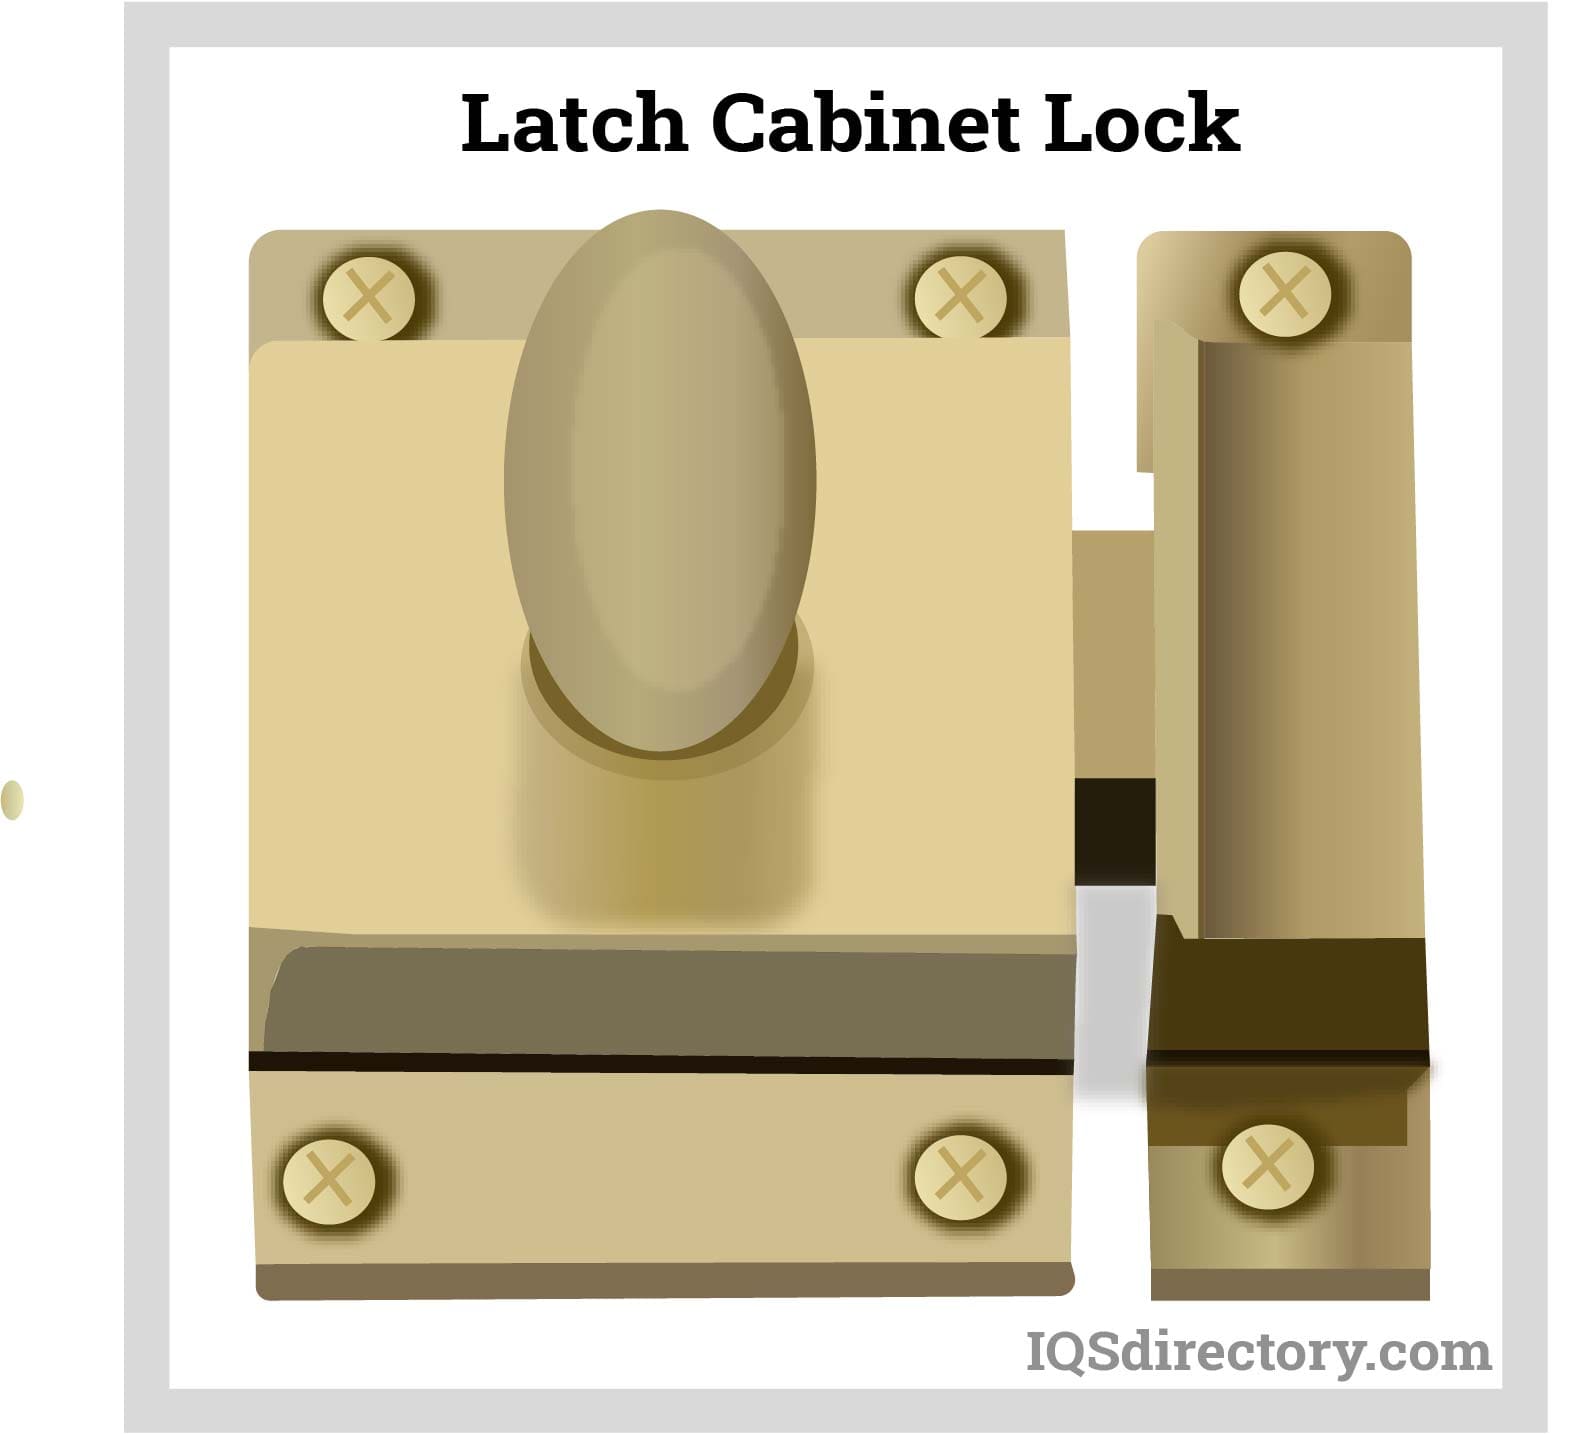 Latch Cabinet Lock